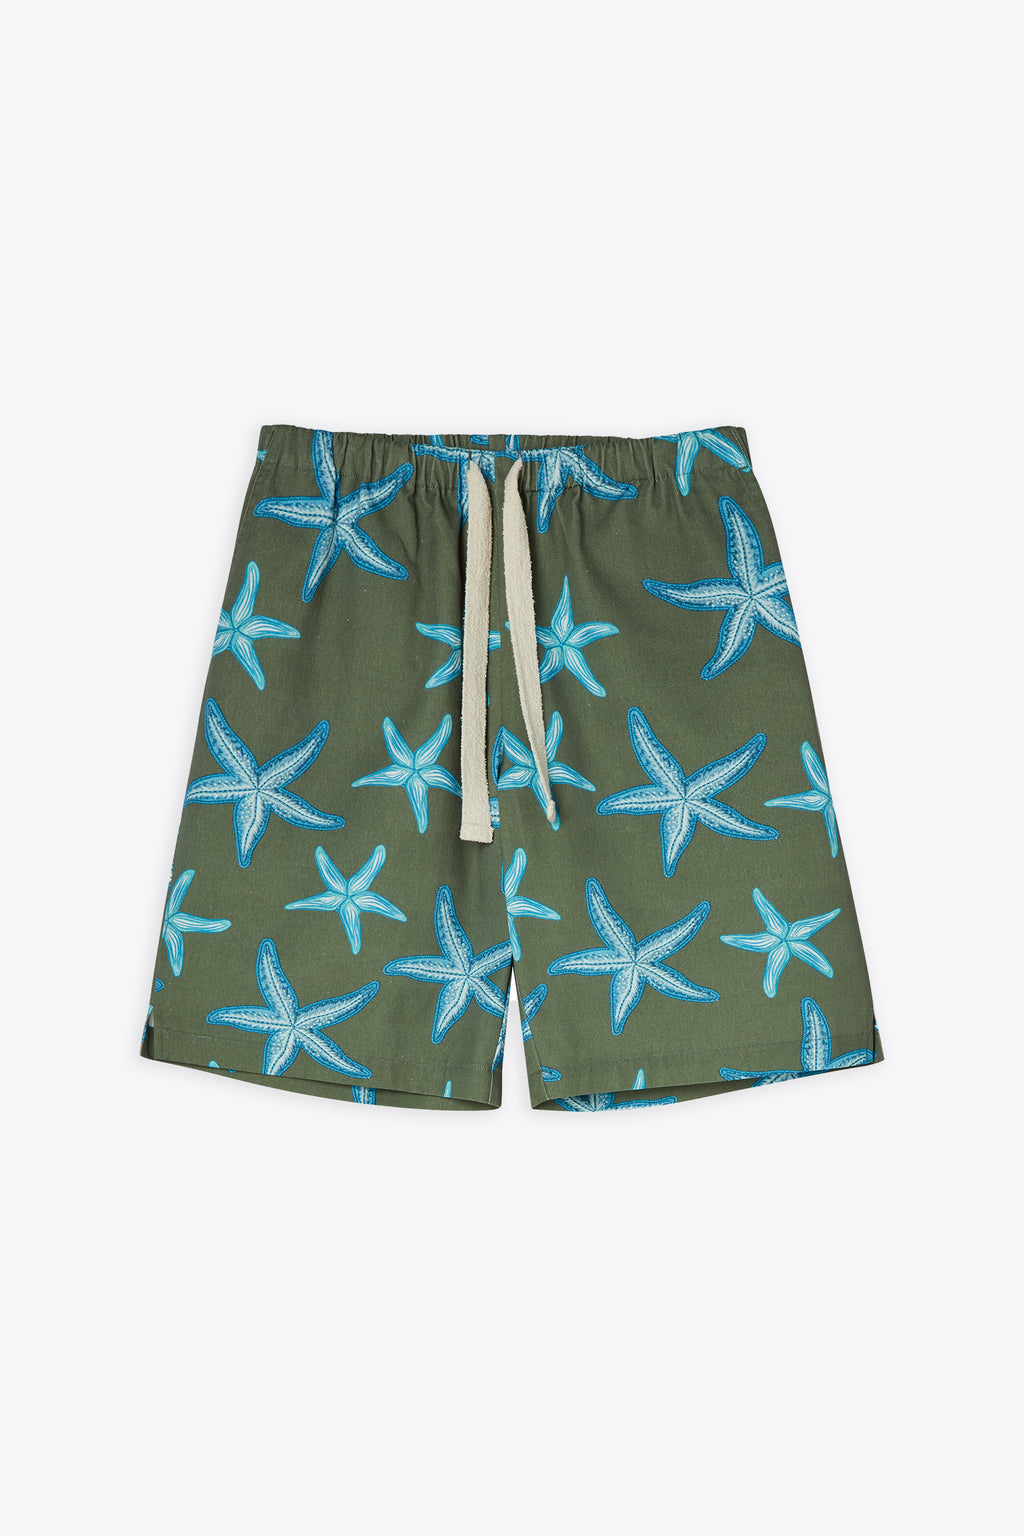 alt-image__Khaki-green-cotton-short-with-starfish-print---Starfish-Pajamas-Shorts-